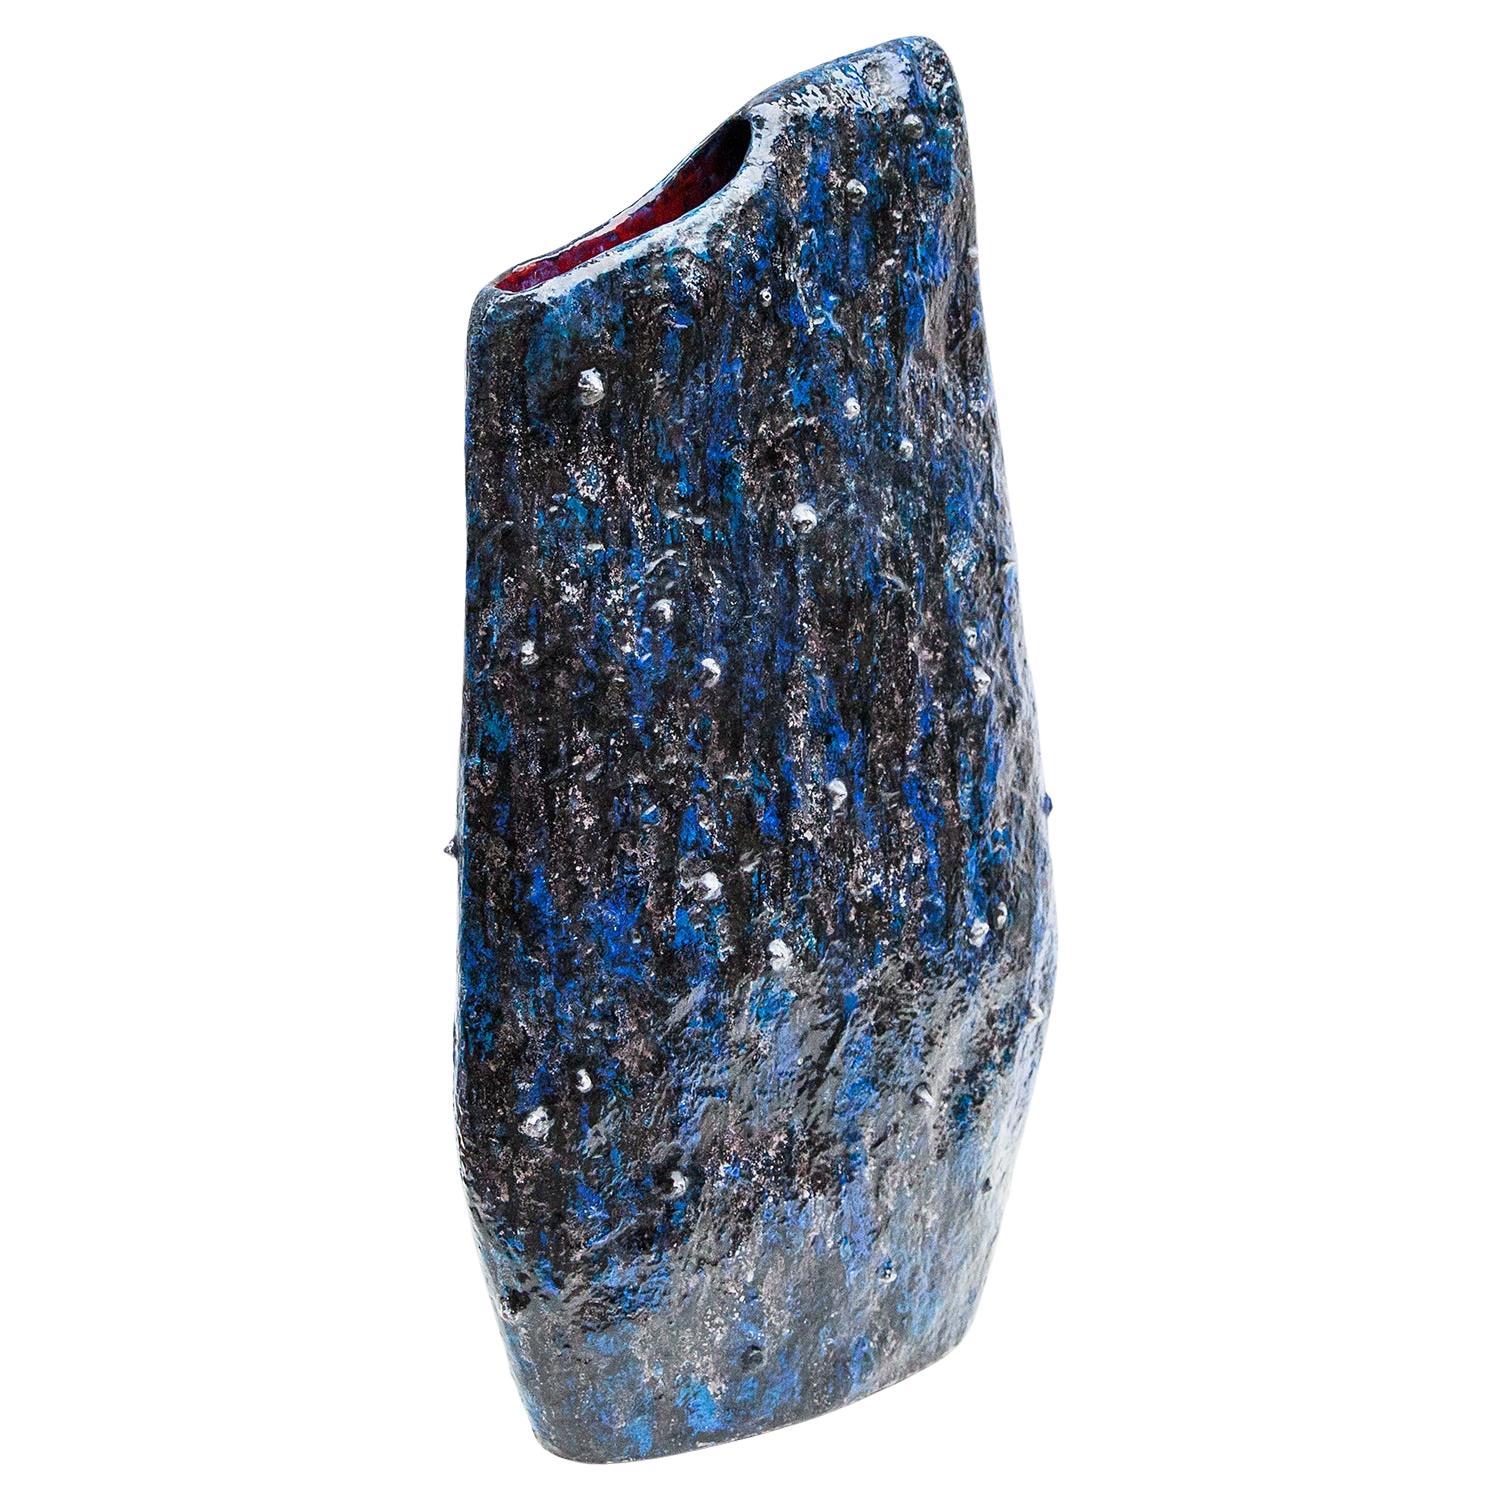 Giant Marcello Fantoni Blue Ceramic Vase Object 1955